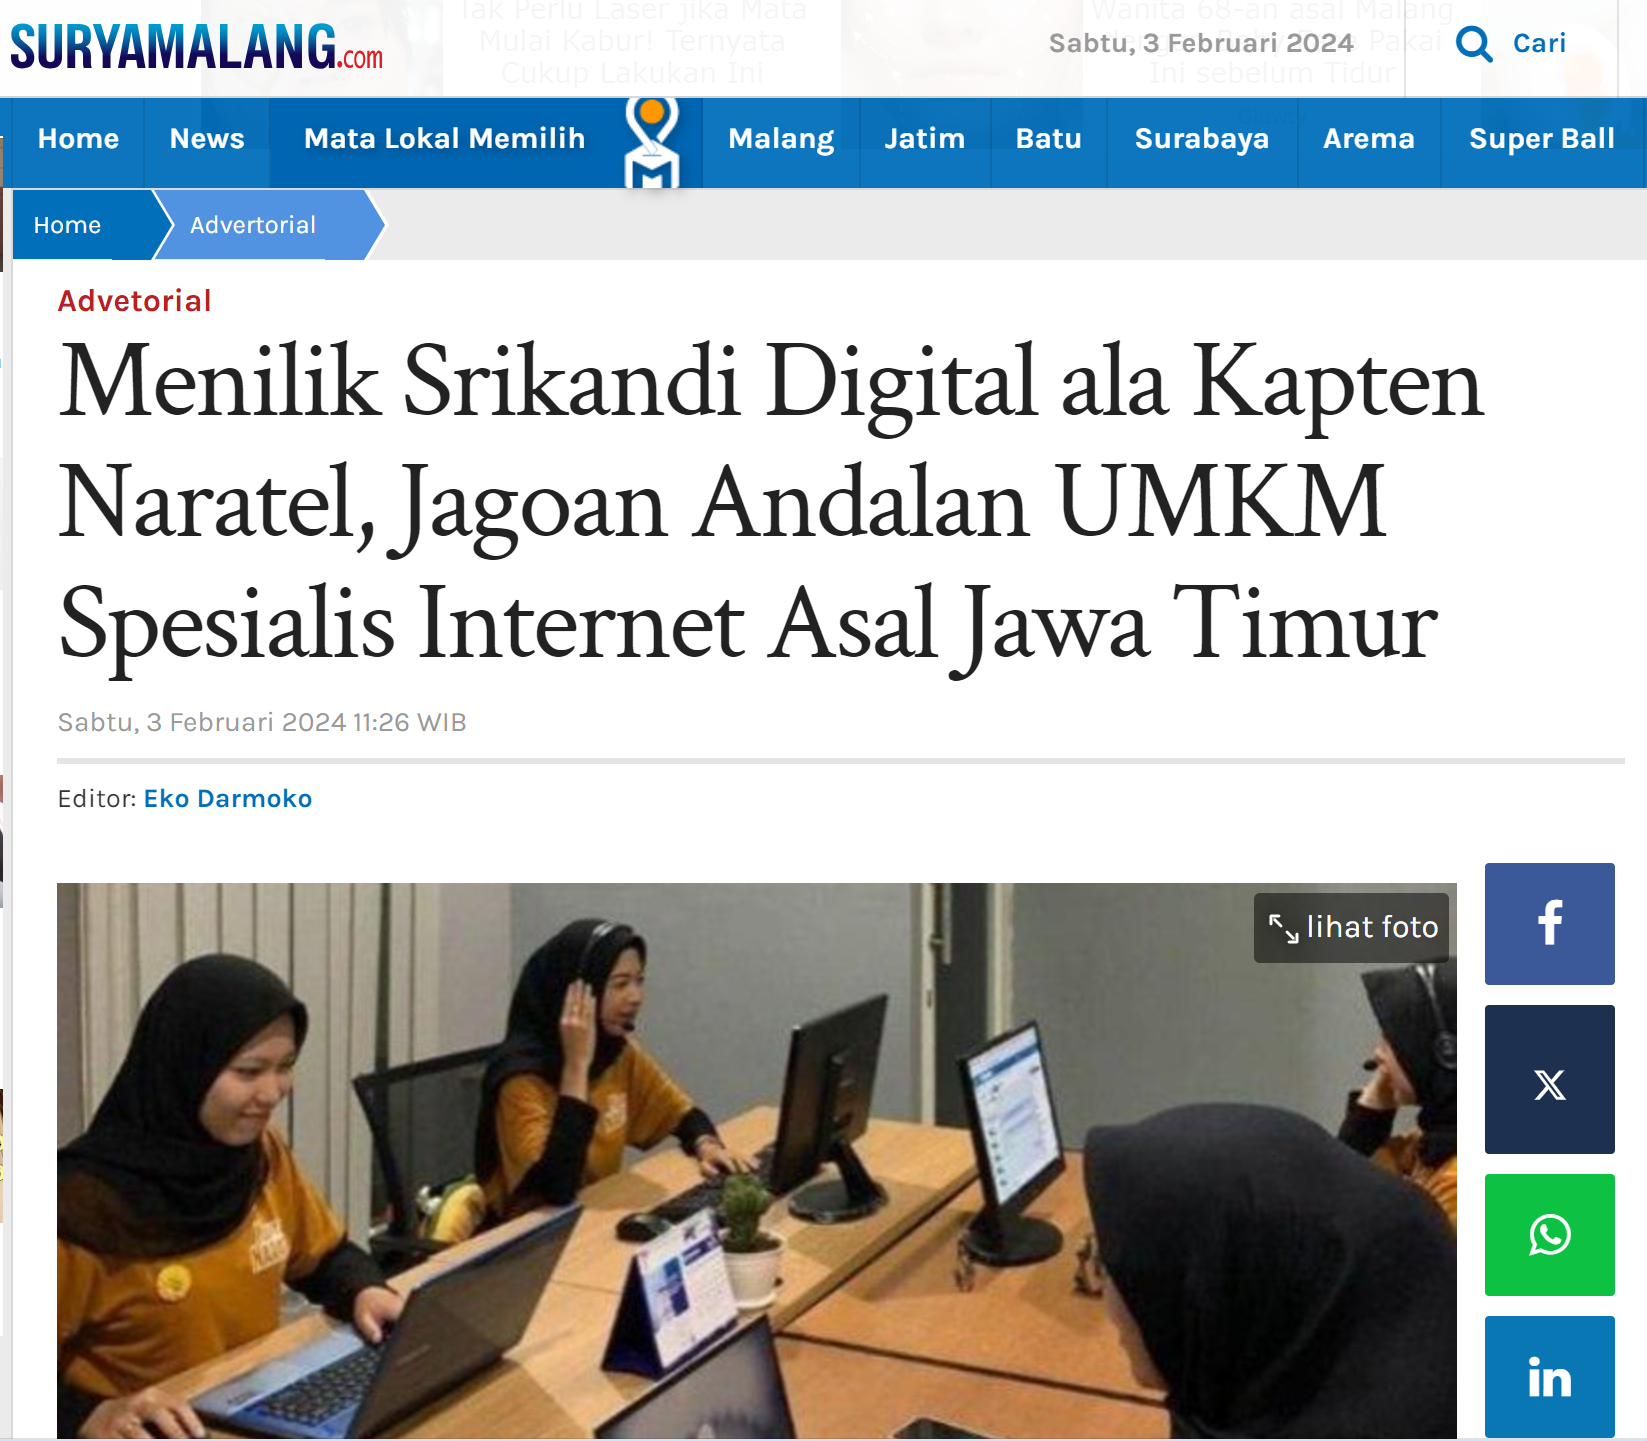 Menilik Srikandi Digital ala Kapten Naratel, Jagoan Andalan UMKM Spesialis Internet Asal Jawa Timur.